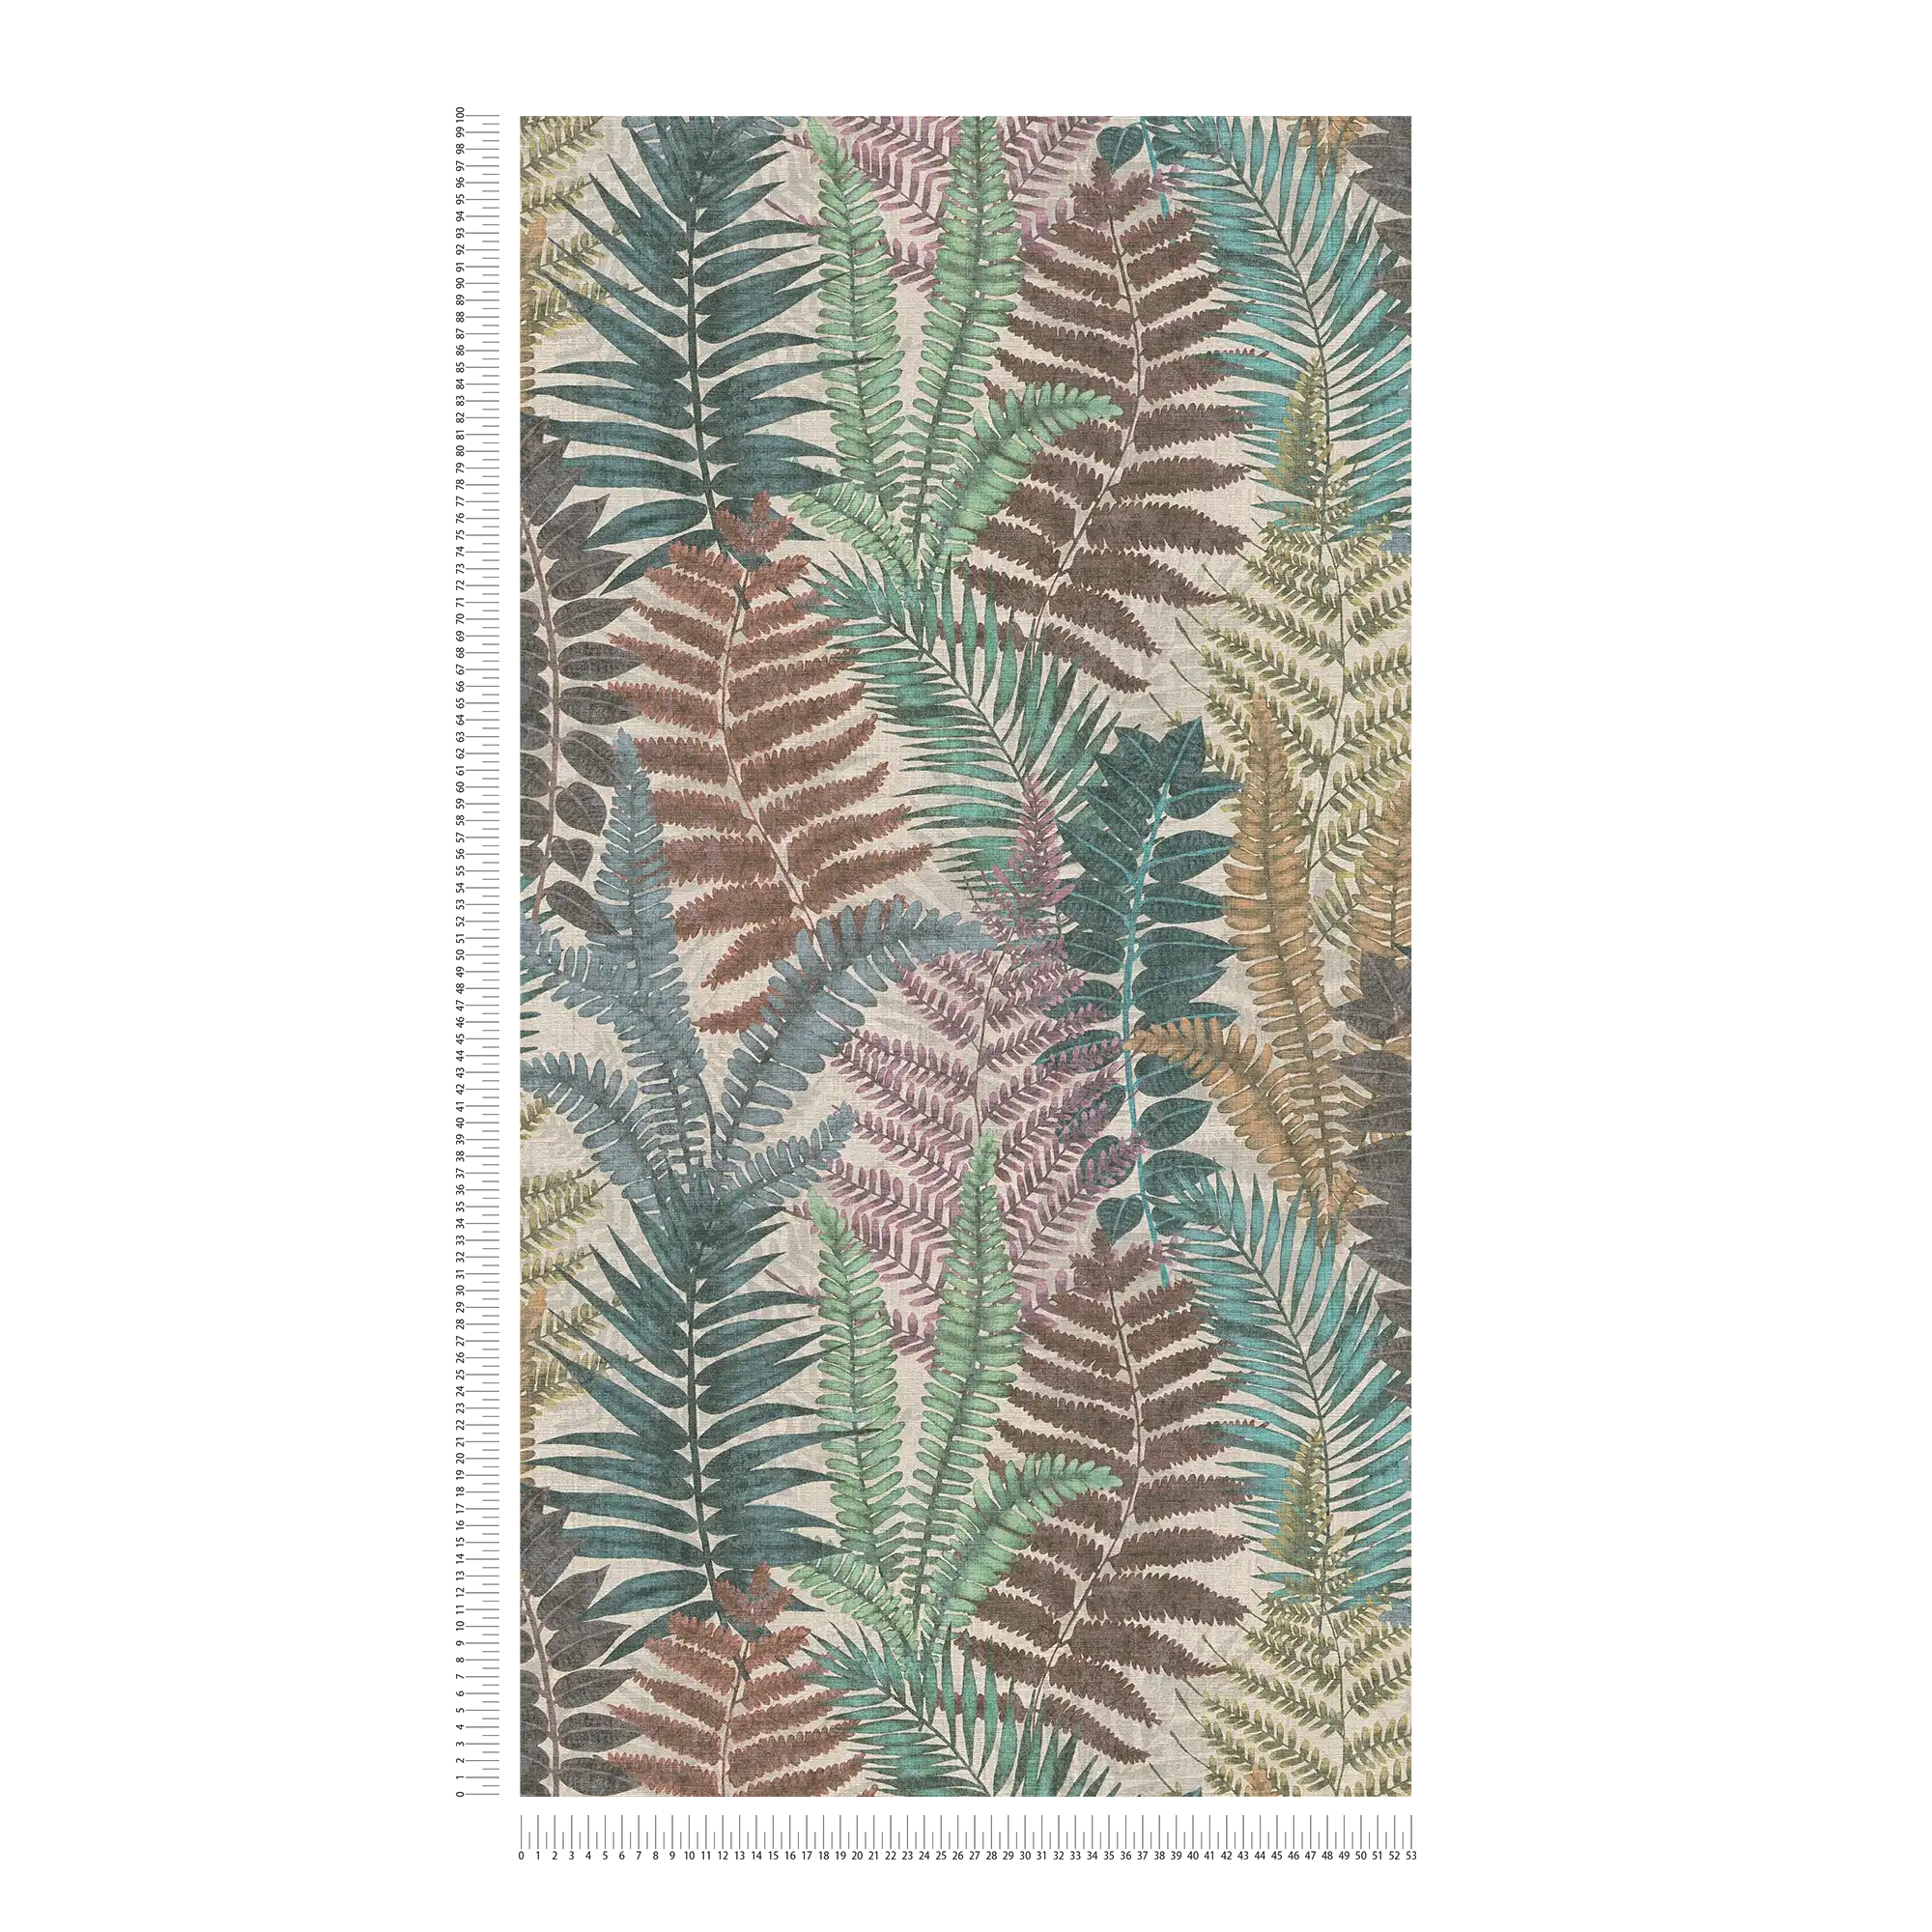             Floral wallpaper with fern leaves lightly textured, matt - multicoloured, beige, green
        